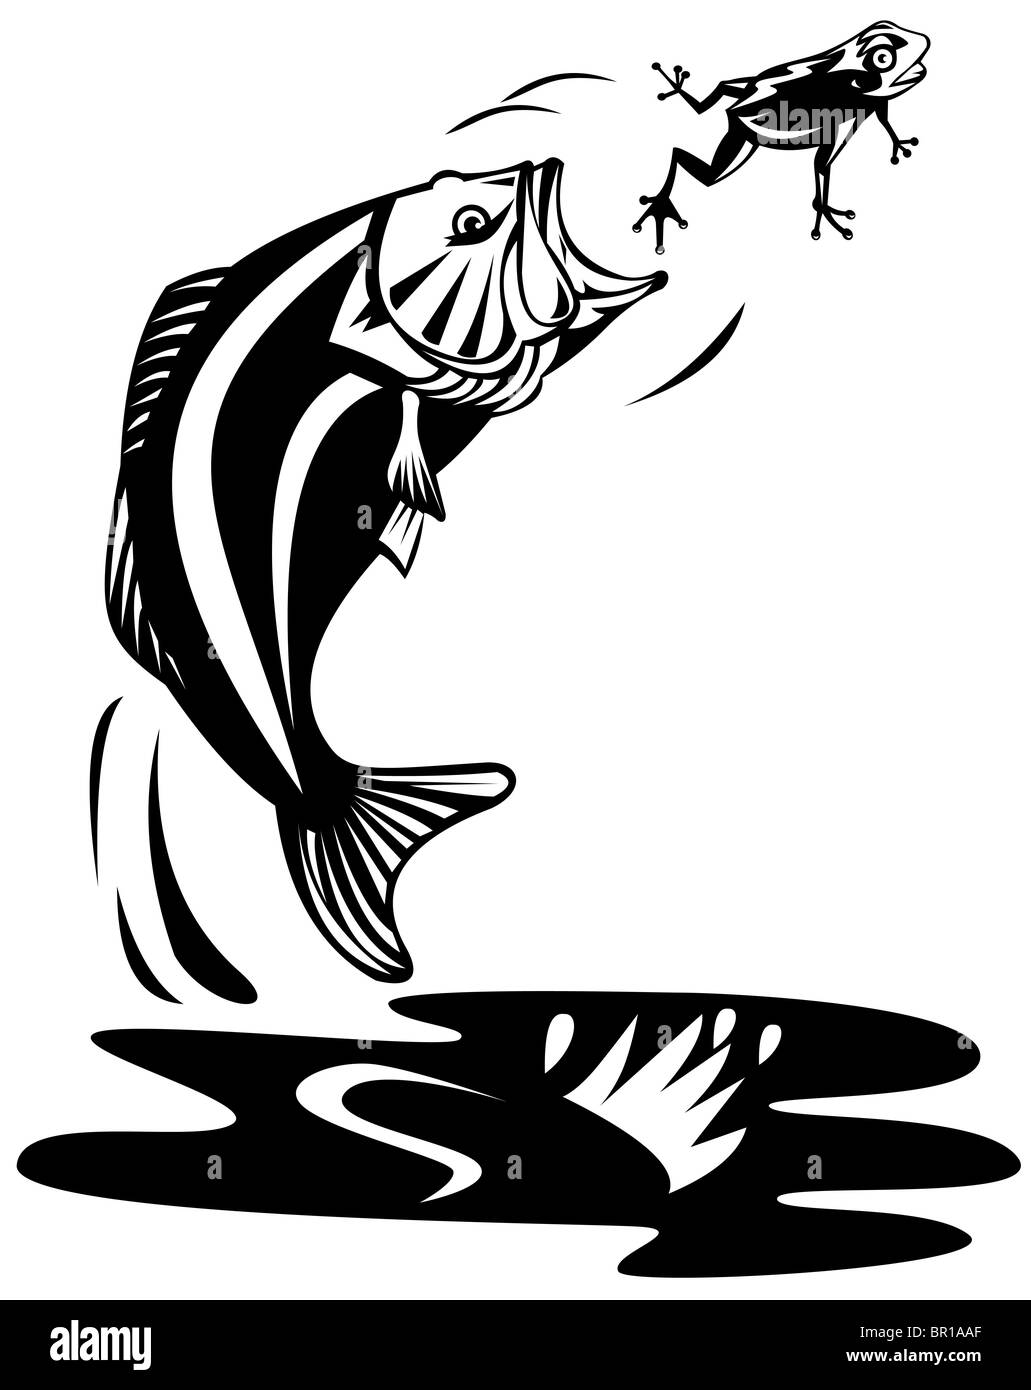 retro woodcut style illustration of a largemouth bass fish jumping on isolated white background Stock Photo